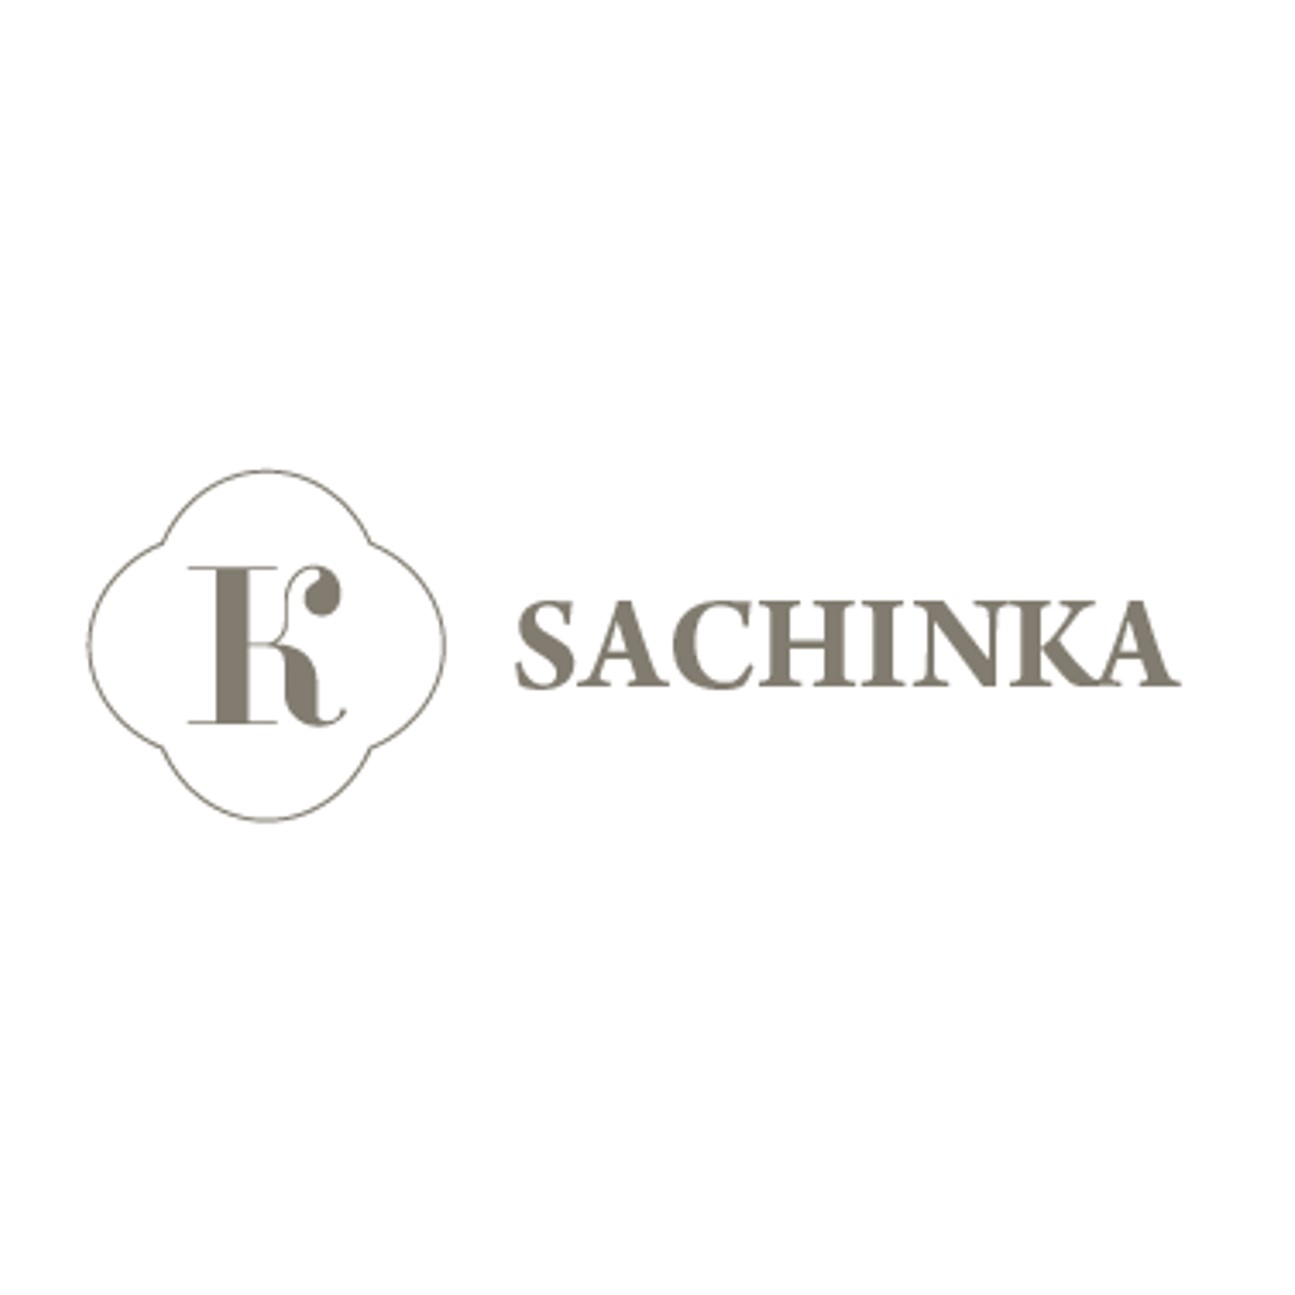 Sachinka